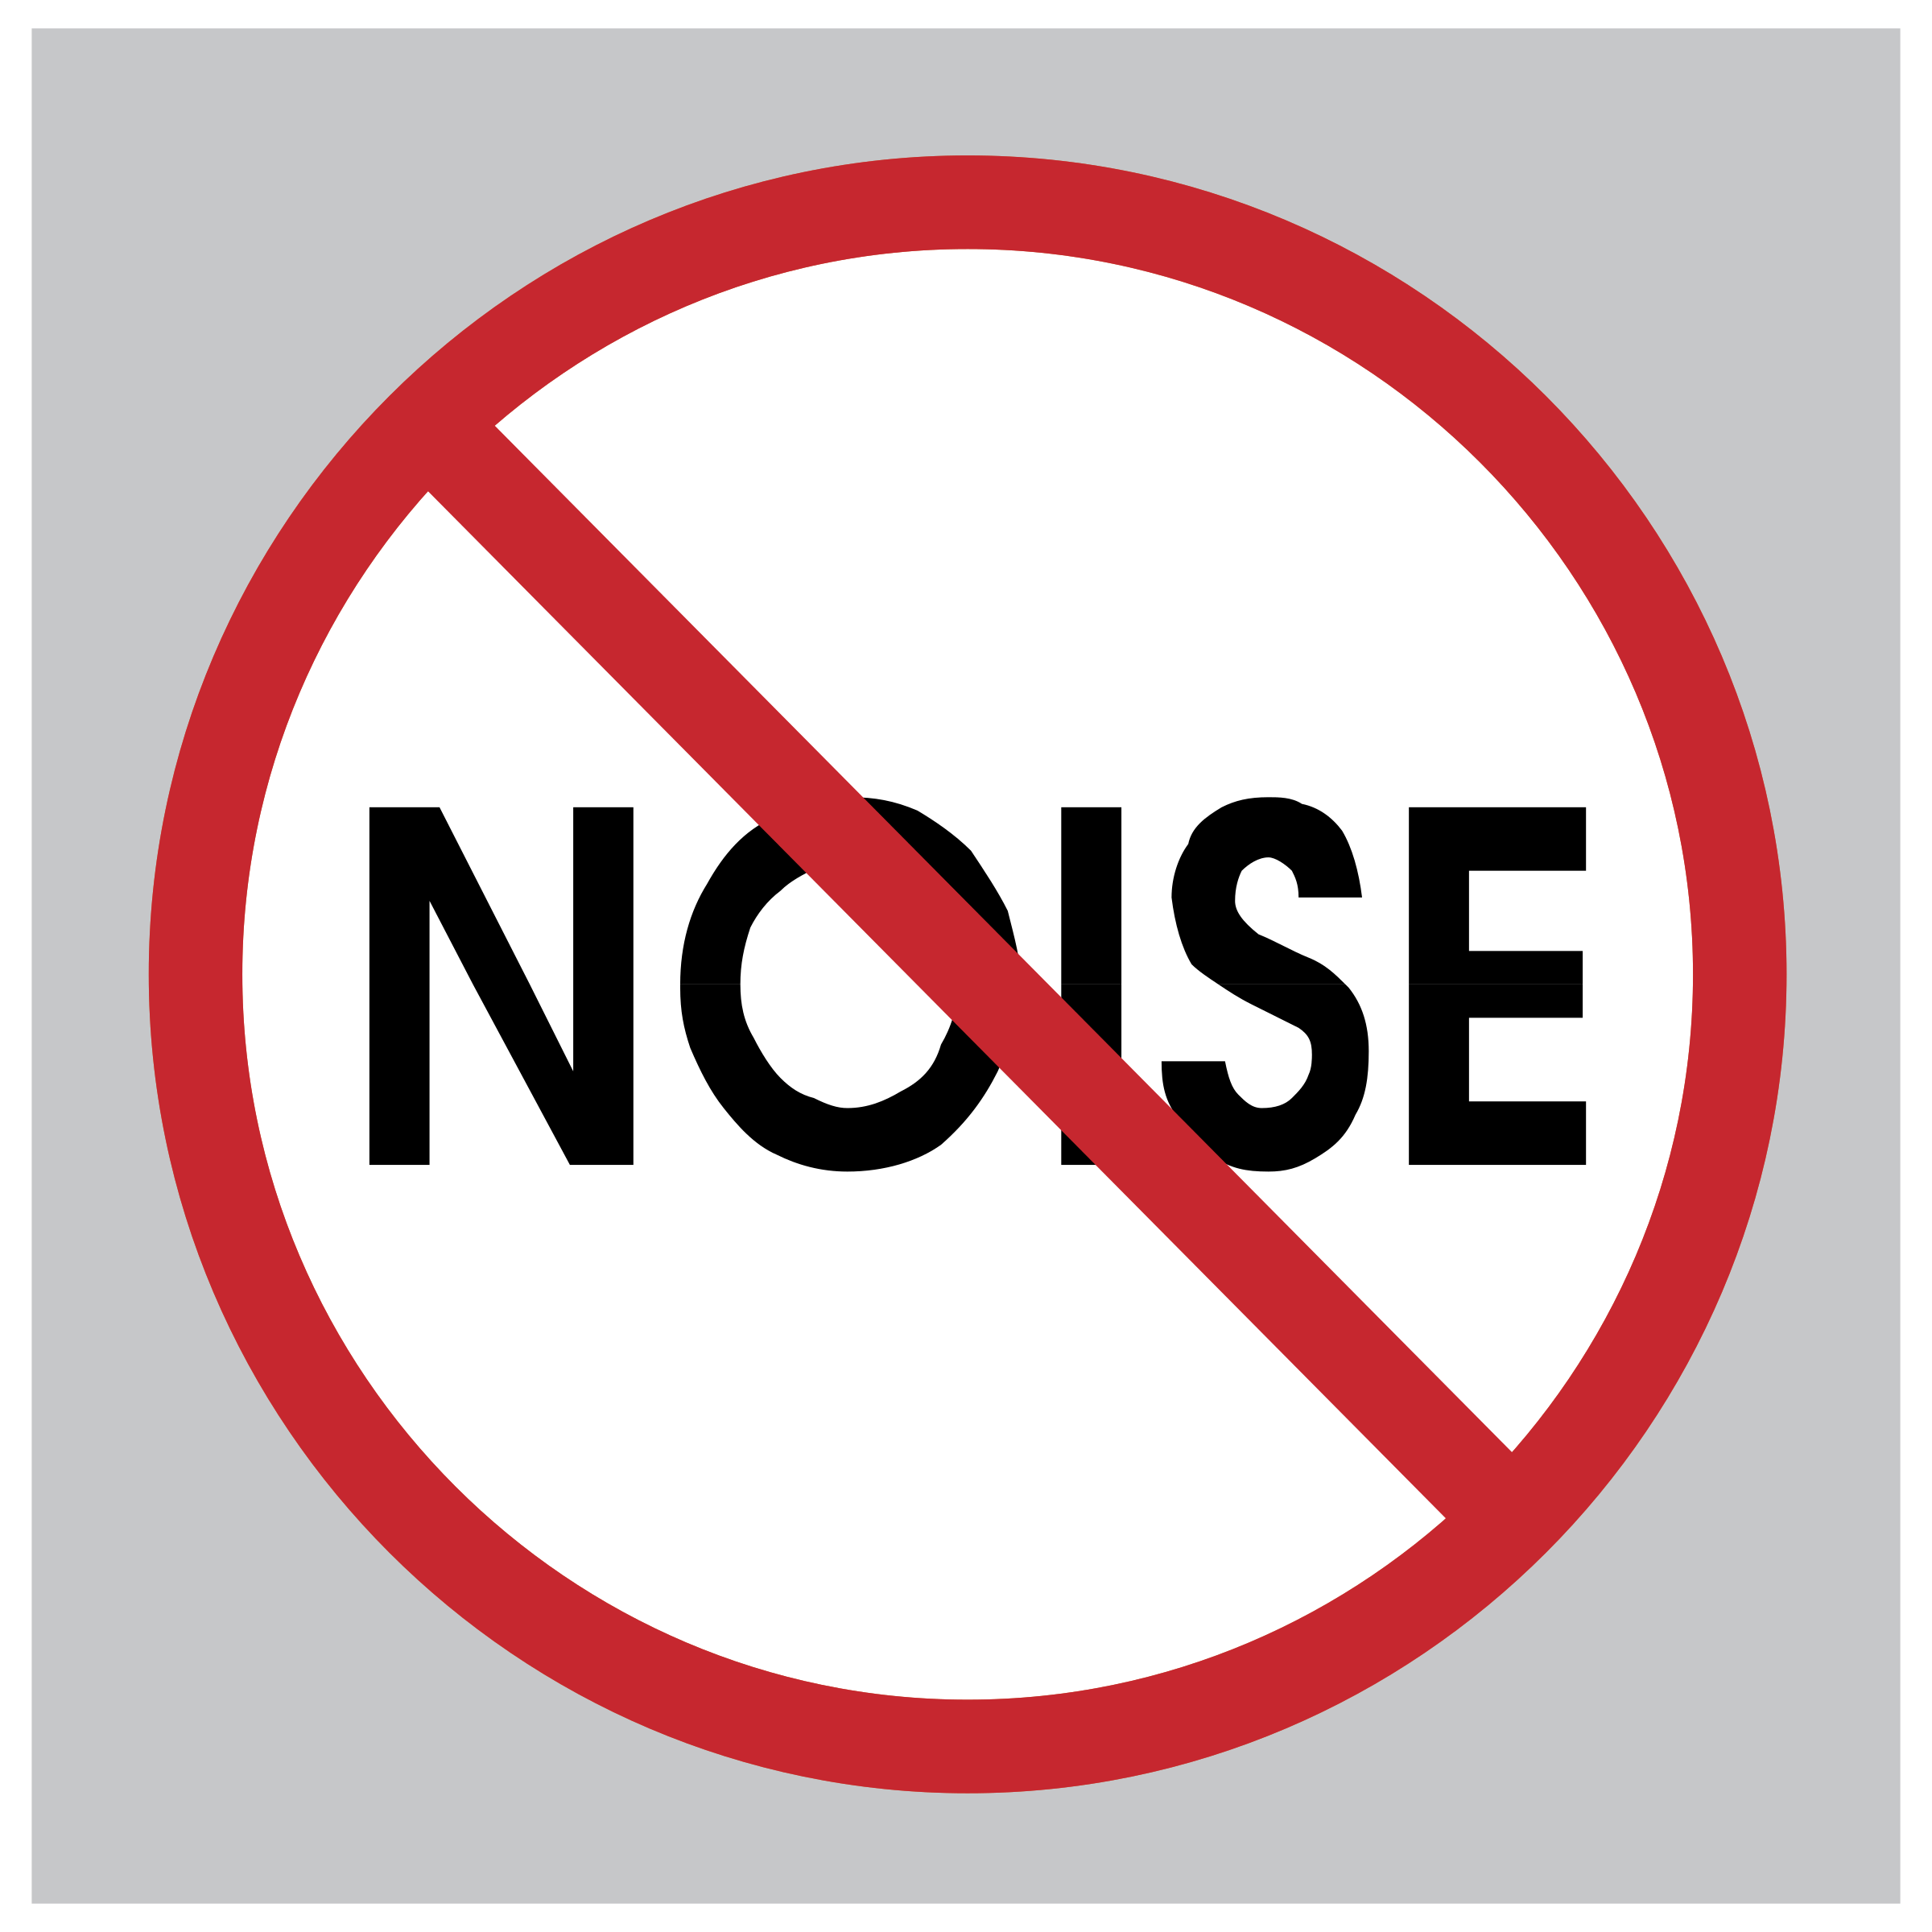 Noise Logo - No Noise Logo PNG Transparent & SVG Vector - Freebie Supply